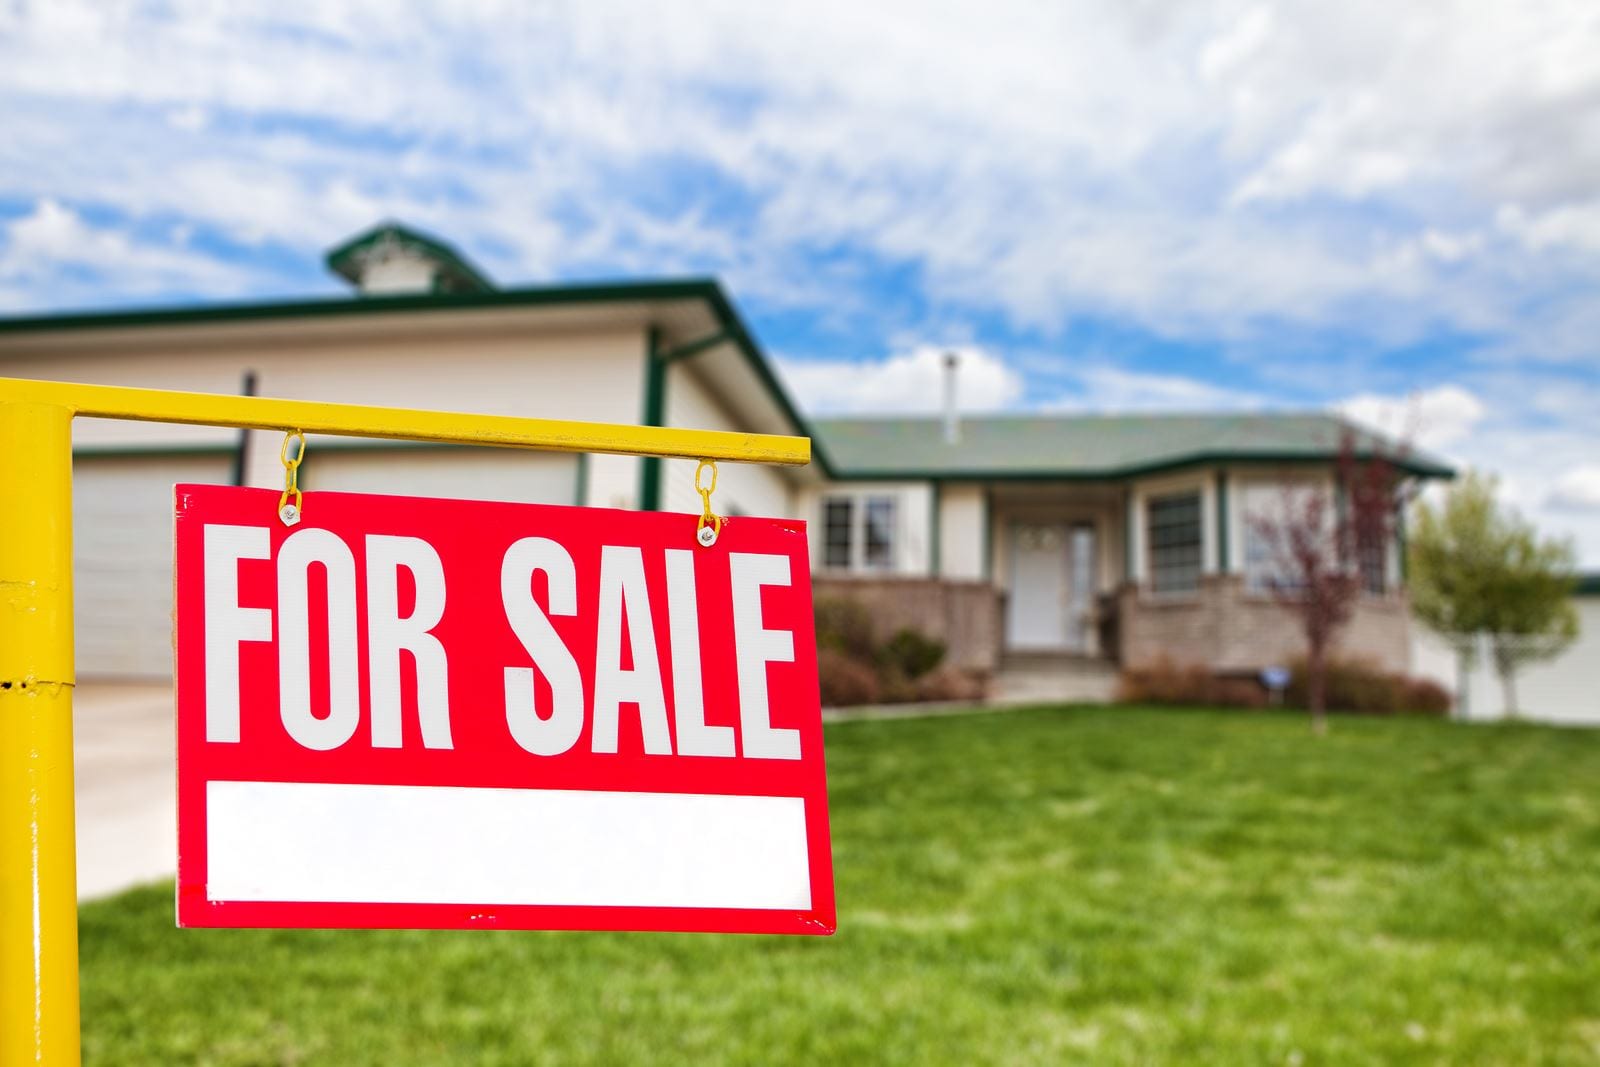 https://www.mashvisor.com/blog/wp-content/uploads/2019/09/How-to-Easily-Find-Affordable-Houses-for-Sale-for-Real-Estate-Investment.jpg